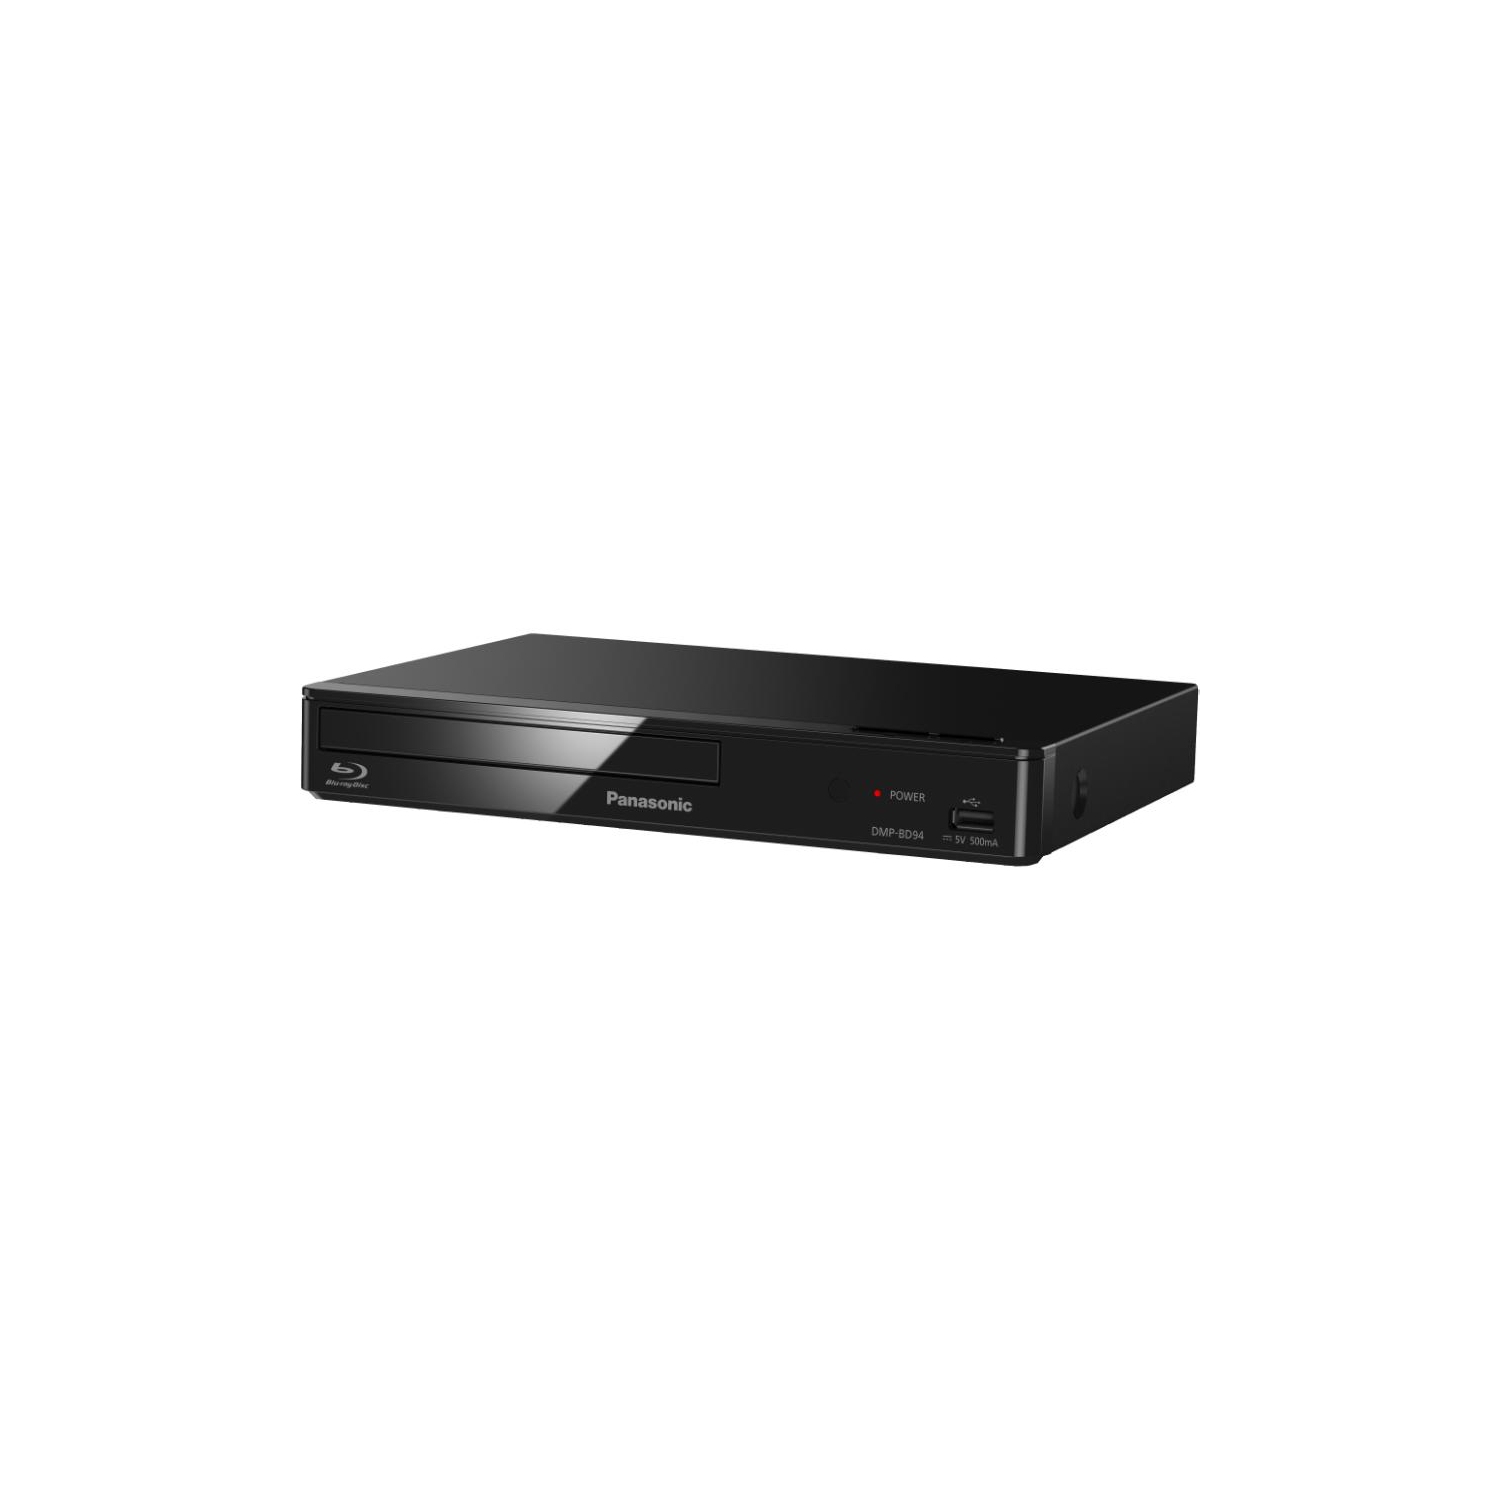 Panasonic Smart Network Blu-Ray Disc Player DMP-BD94 (Black), WiFi